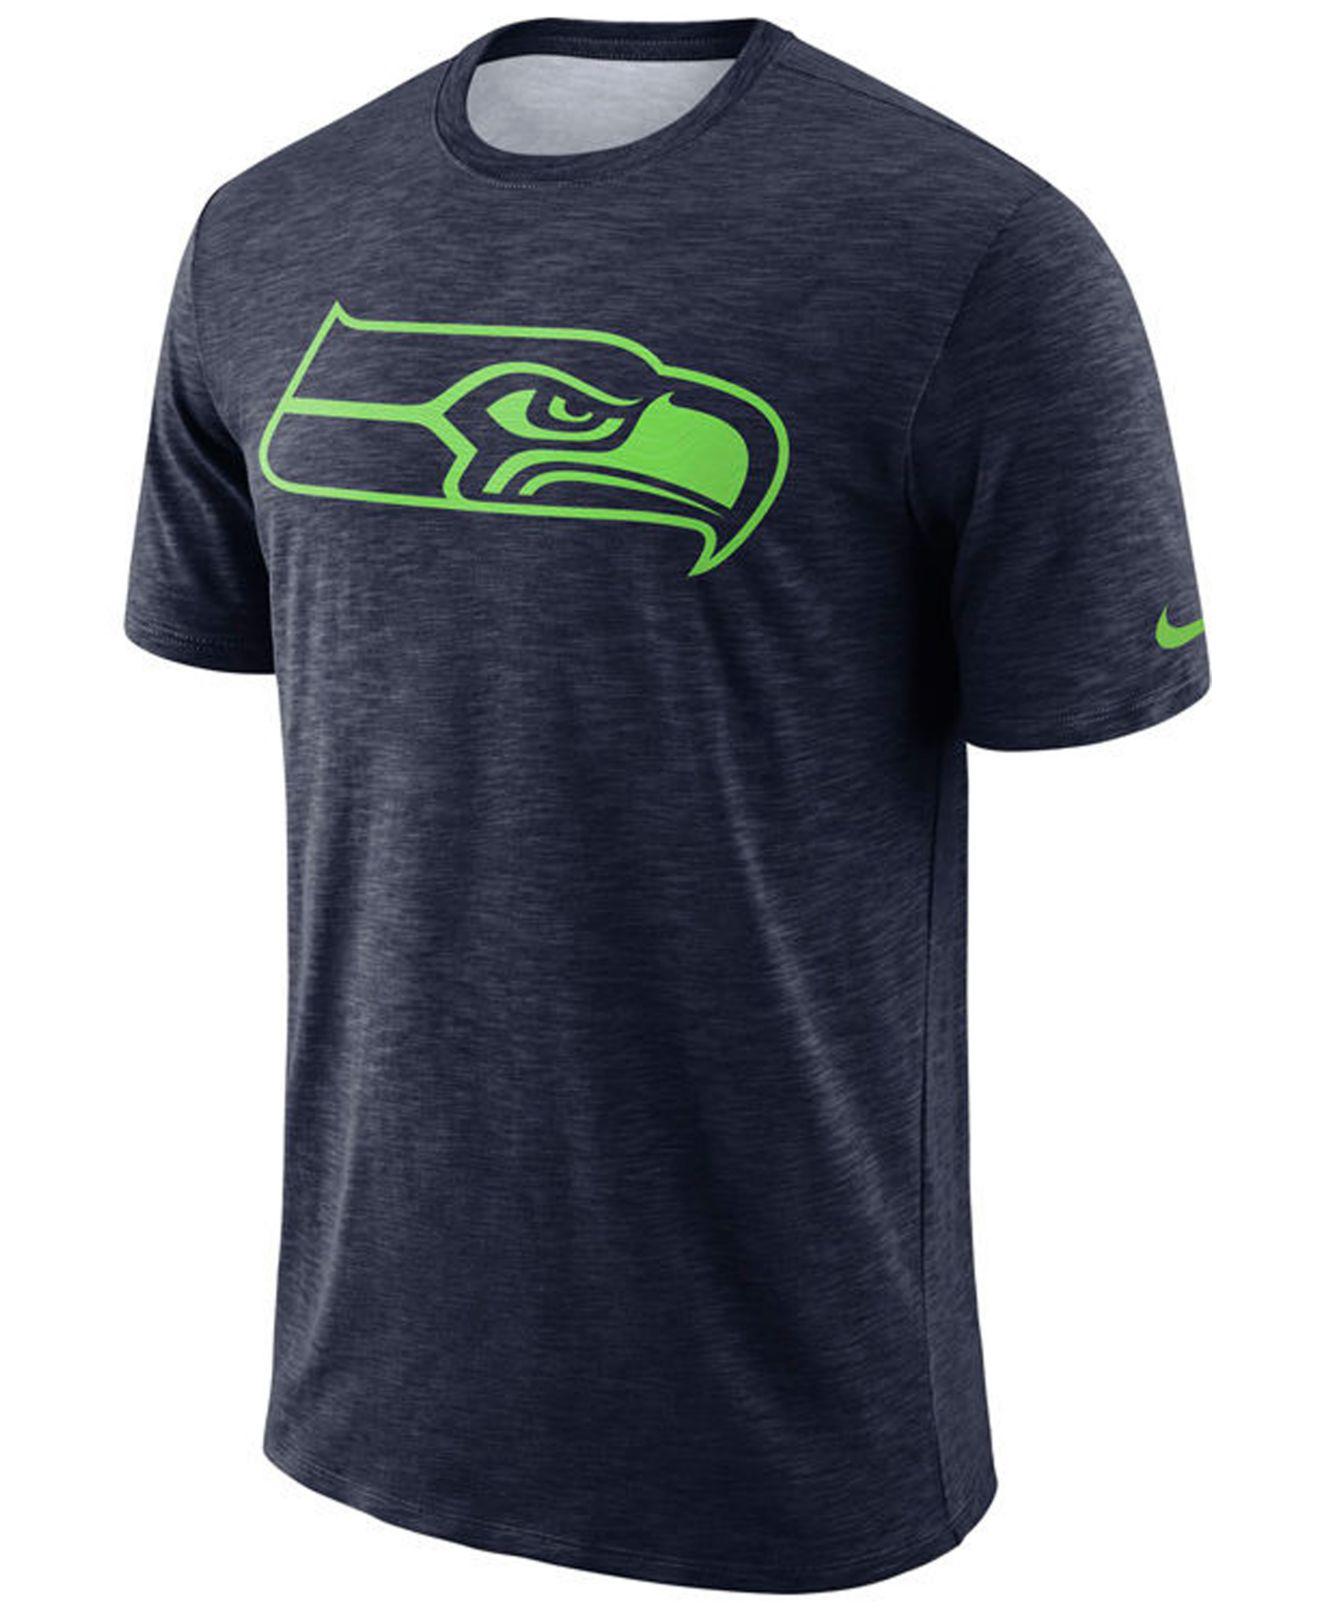 Nike Seattle Seahawks Dri-fit Cotton Slub On-field T-shirt in Navy/Lime ...